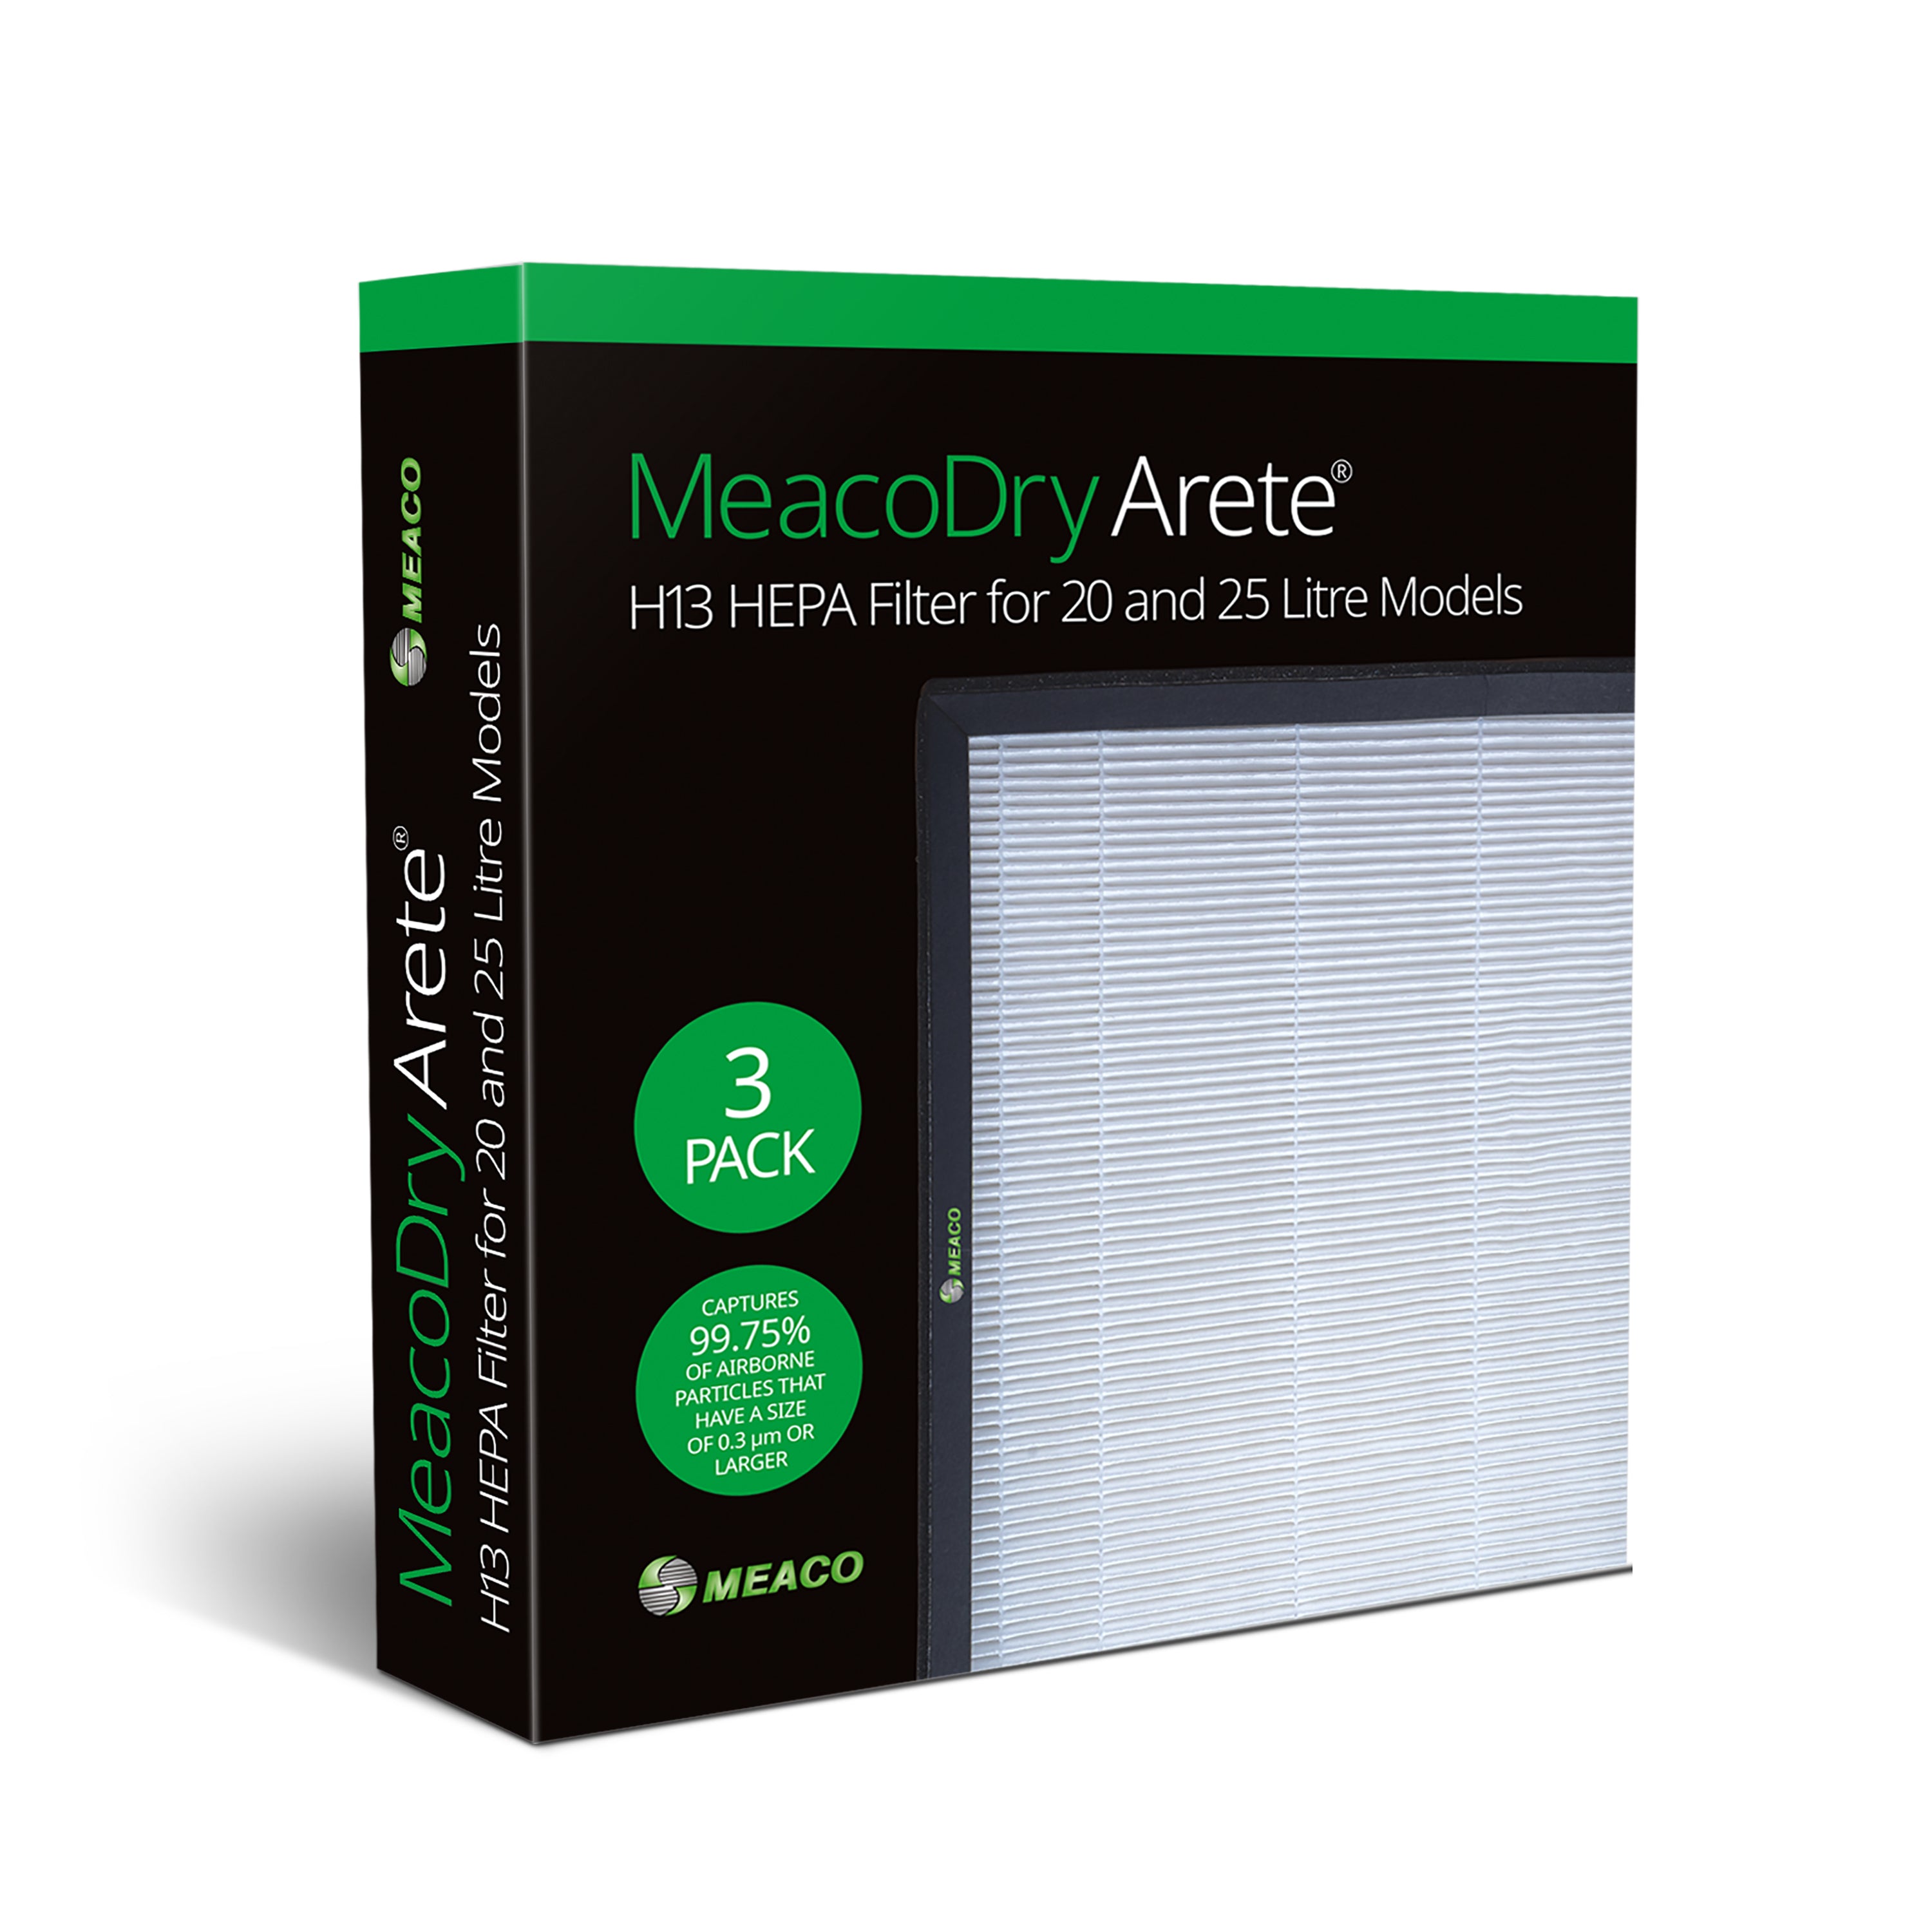 MeacoDry Arete® One 20L et 25L Filtre HEPA H13